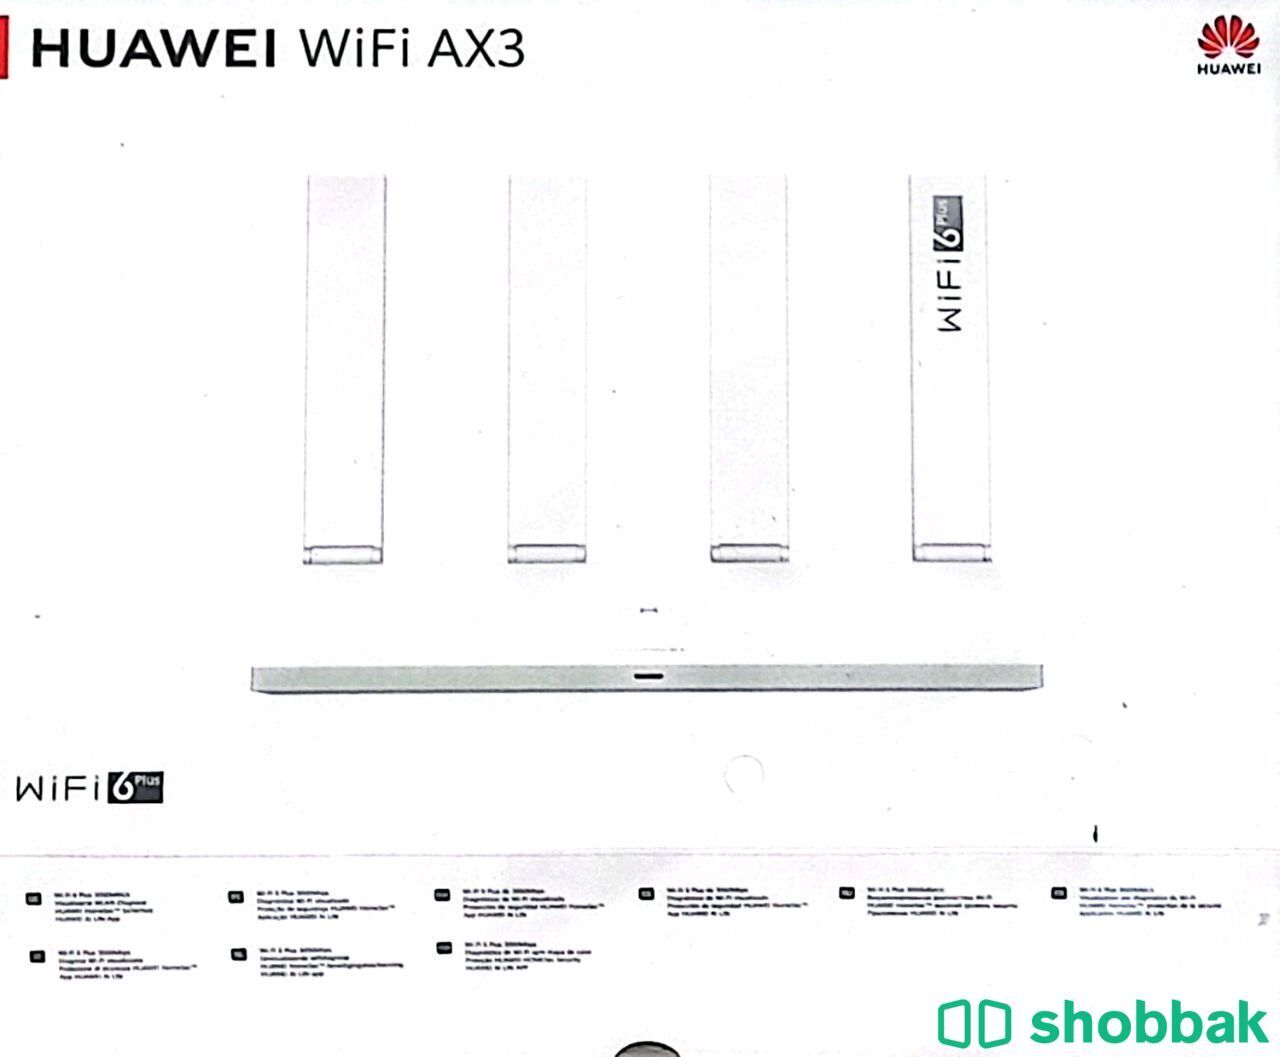 HUAWEI WiFi AX3 Shobbak Saudi Arabia